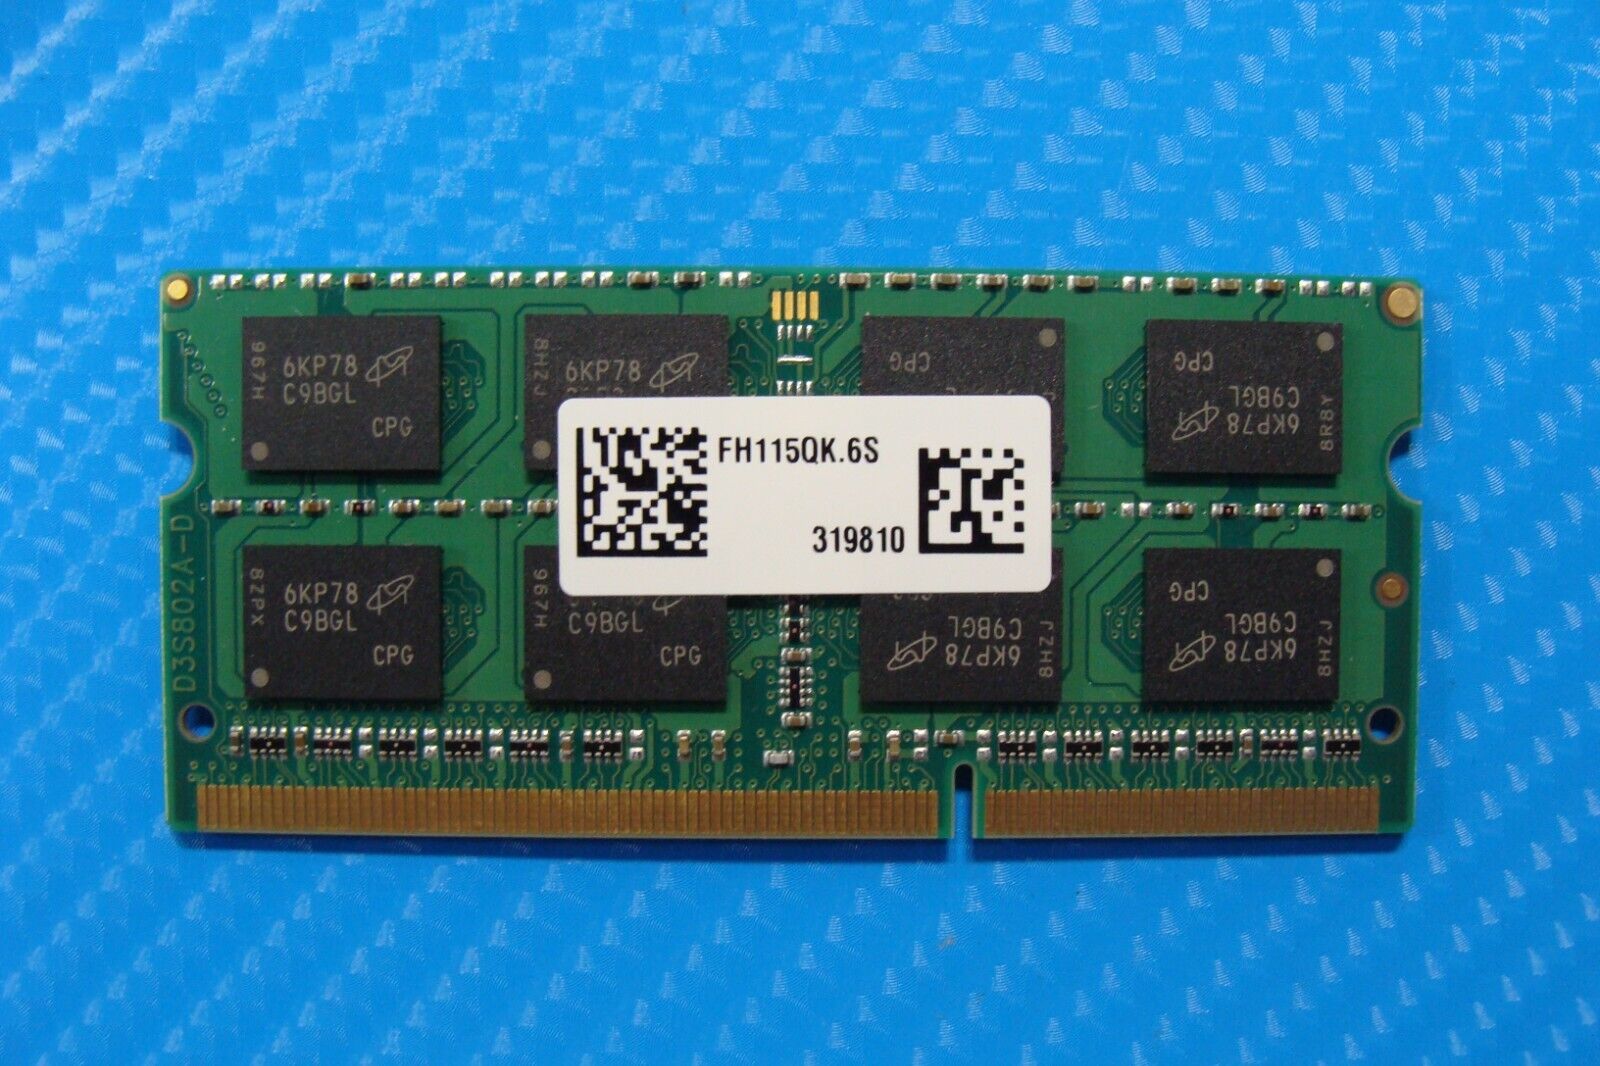 Dell 3570 Crucial 4GB DDR3L-1600 Memory RAM SO-DIMM CT51264BF160B.C16FPR2